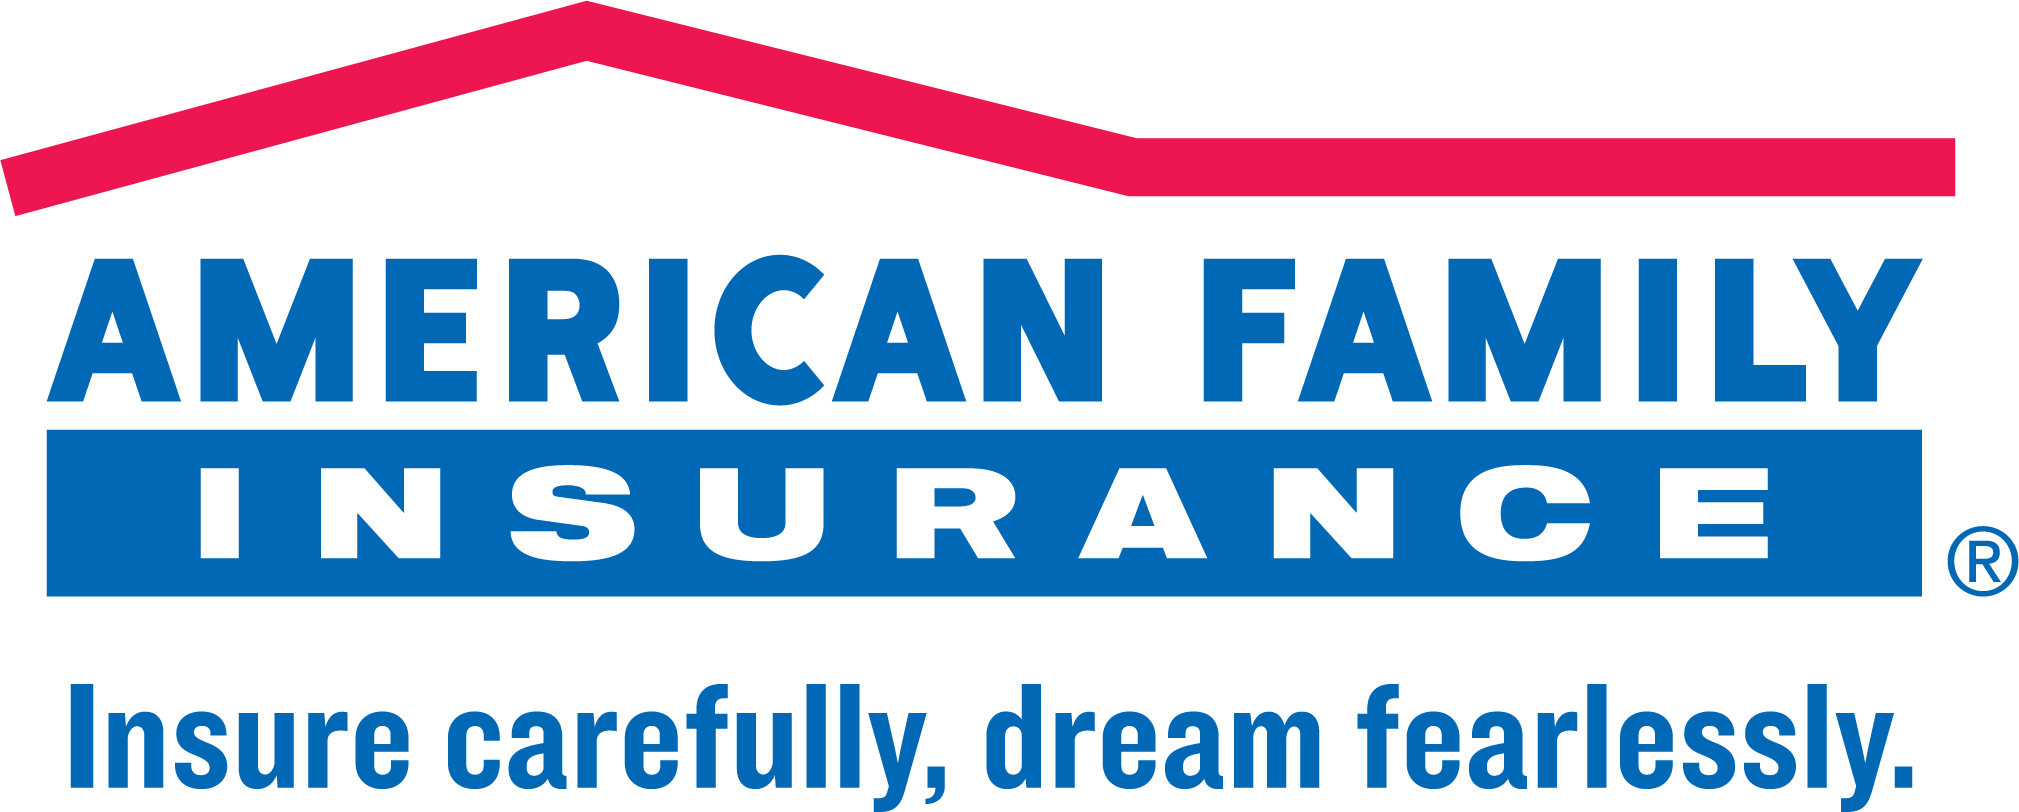 Diamond- American family insurance.png